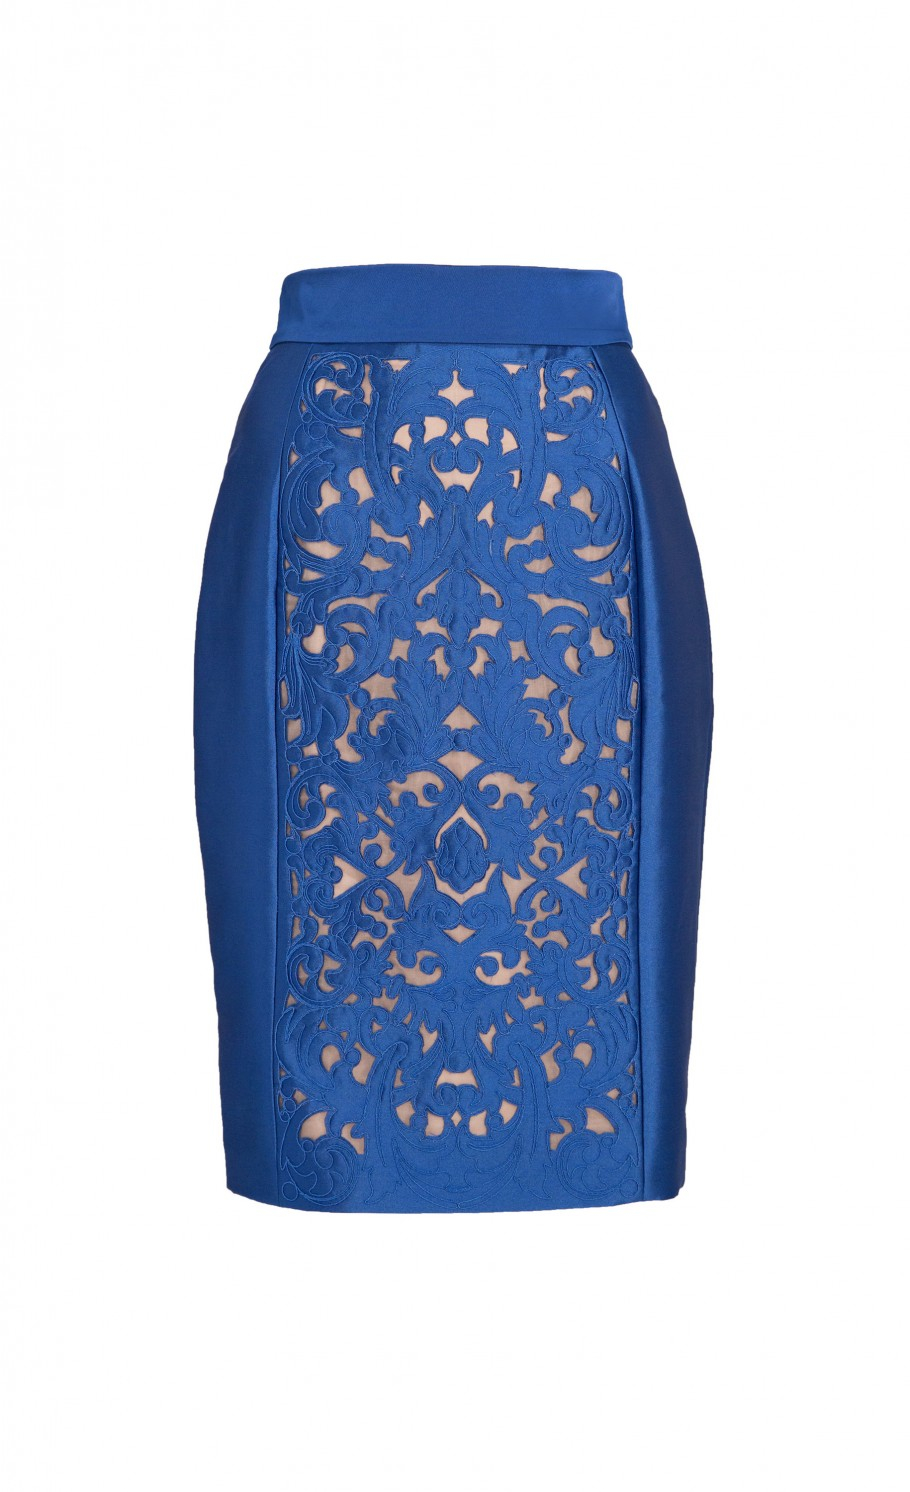 Lyst - Temperley london Luz Skirt in Blue